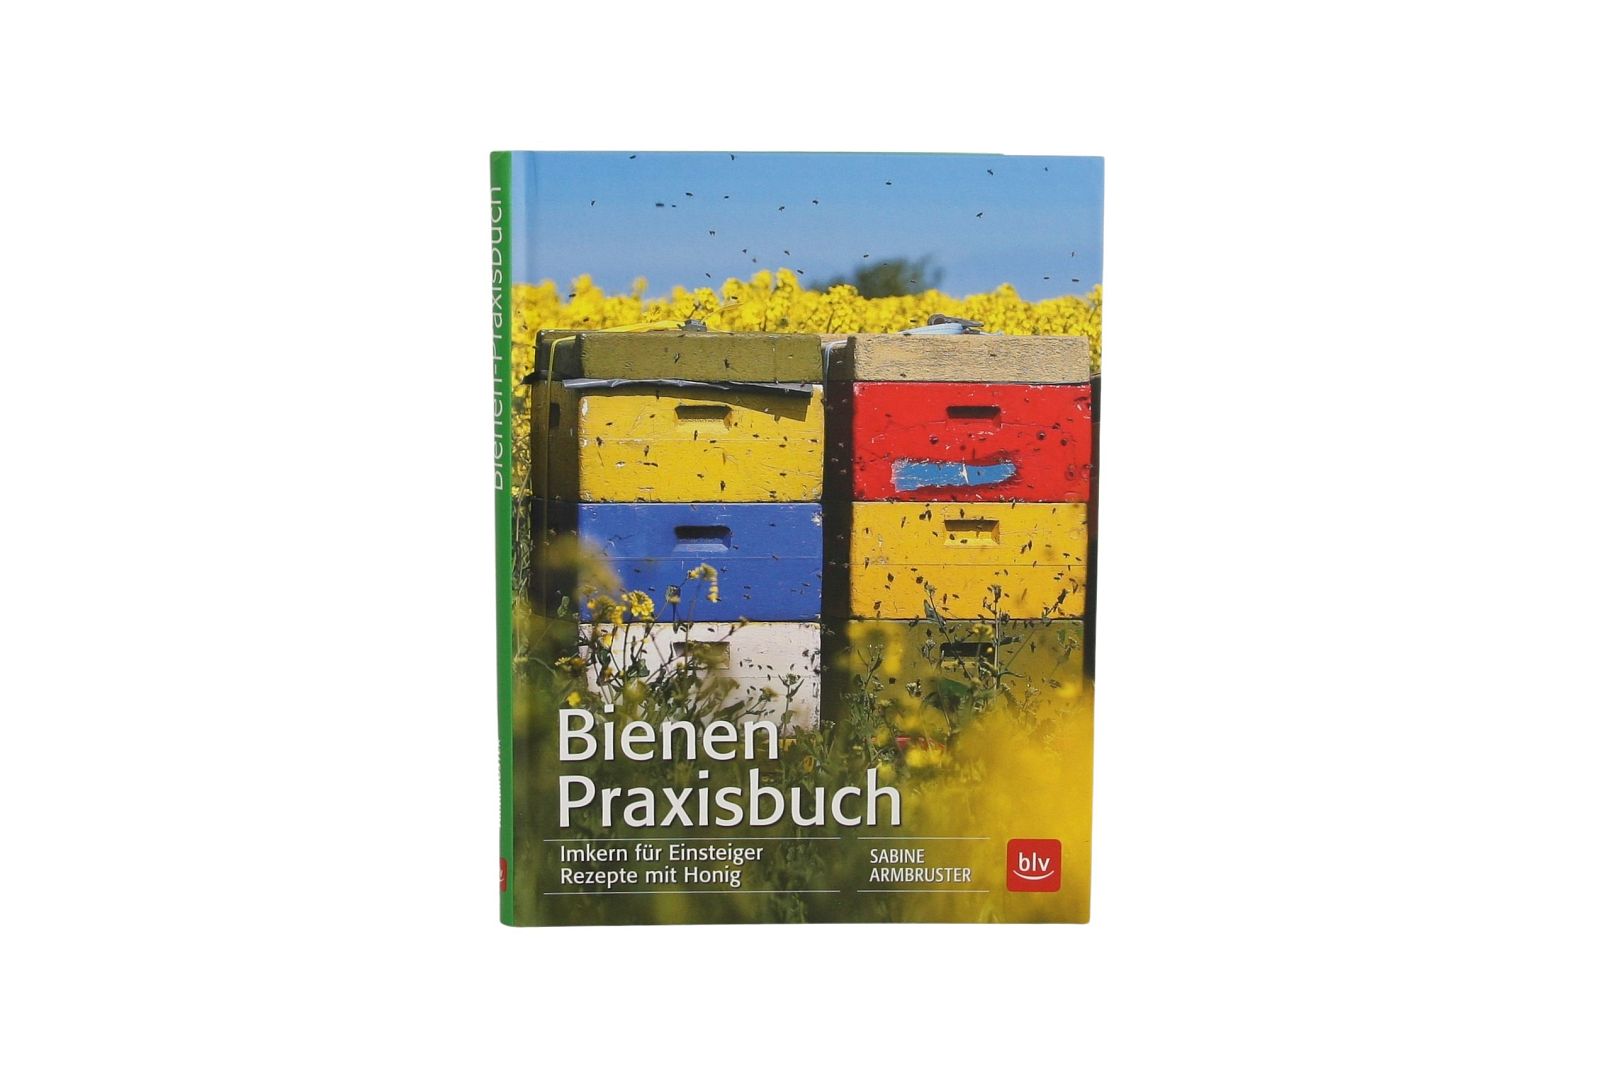 Bienen Praxisbuch, Sabine Armbruster